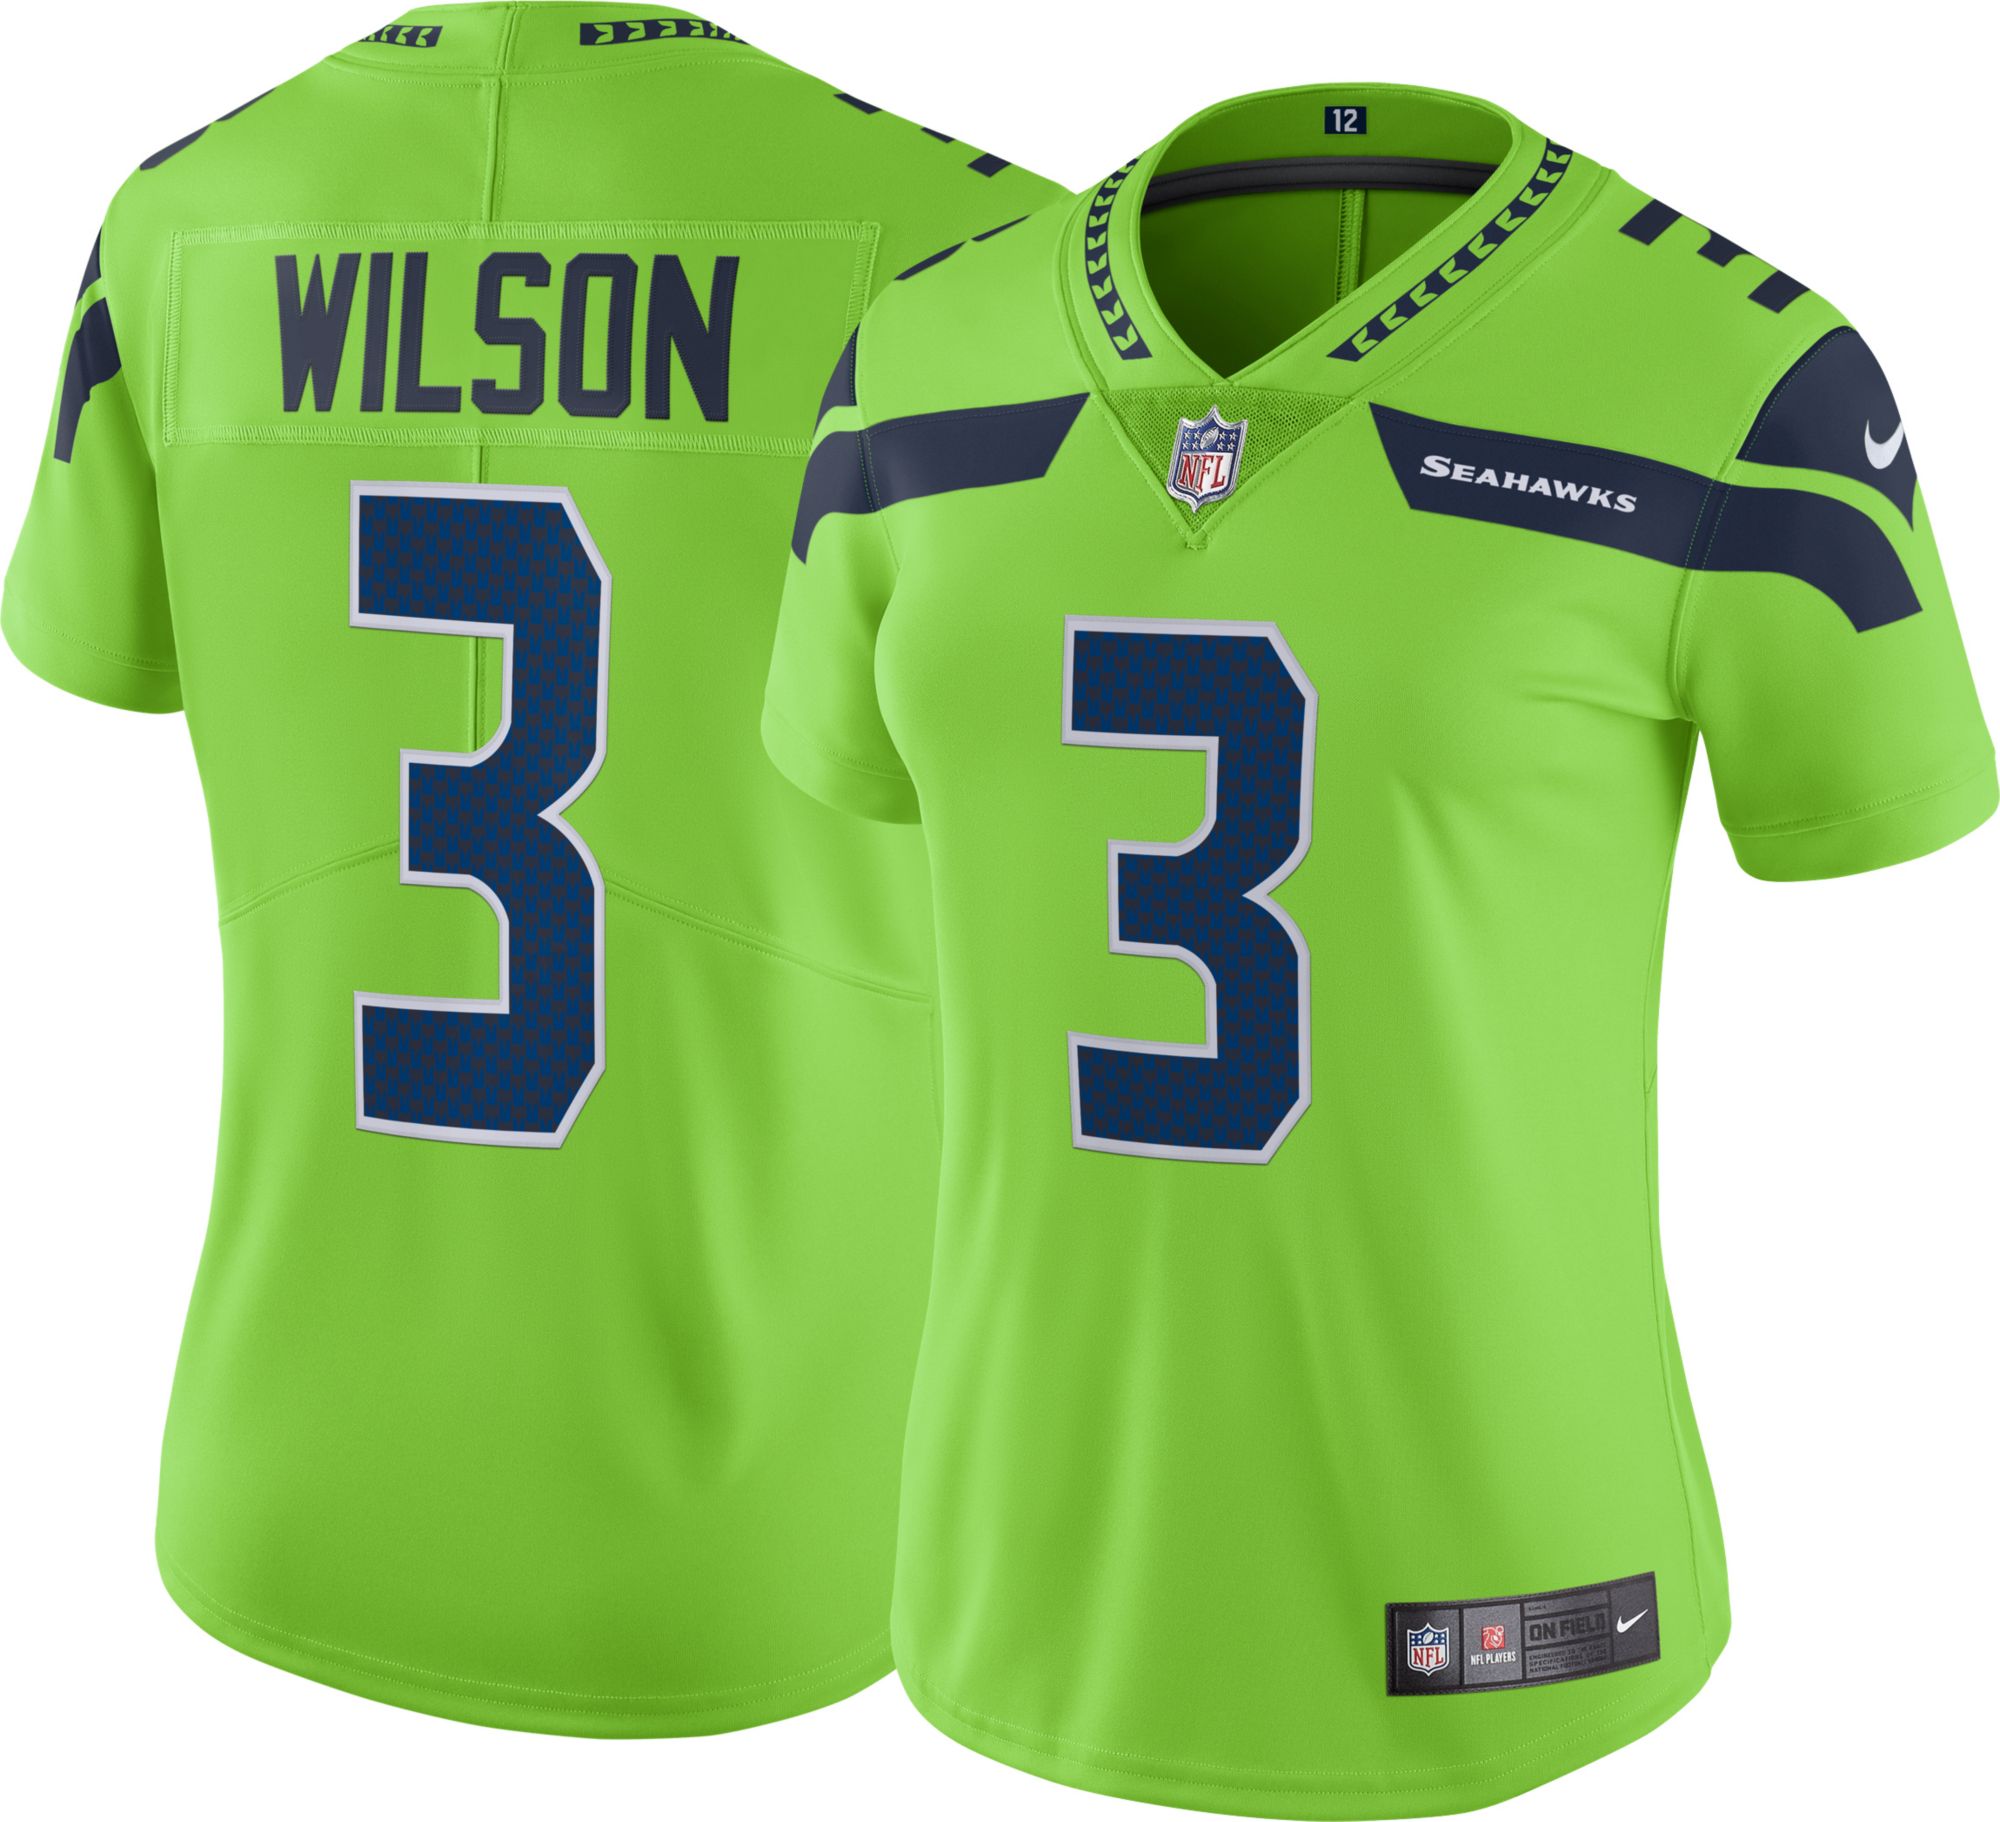 russell wilson neon green jersey